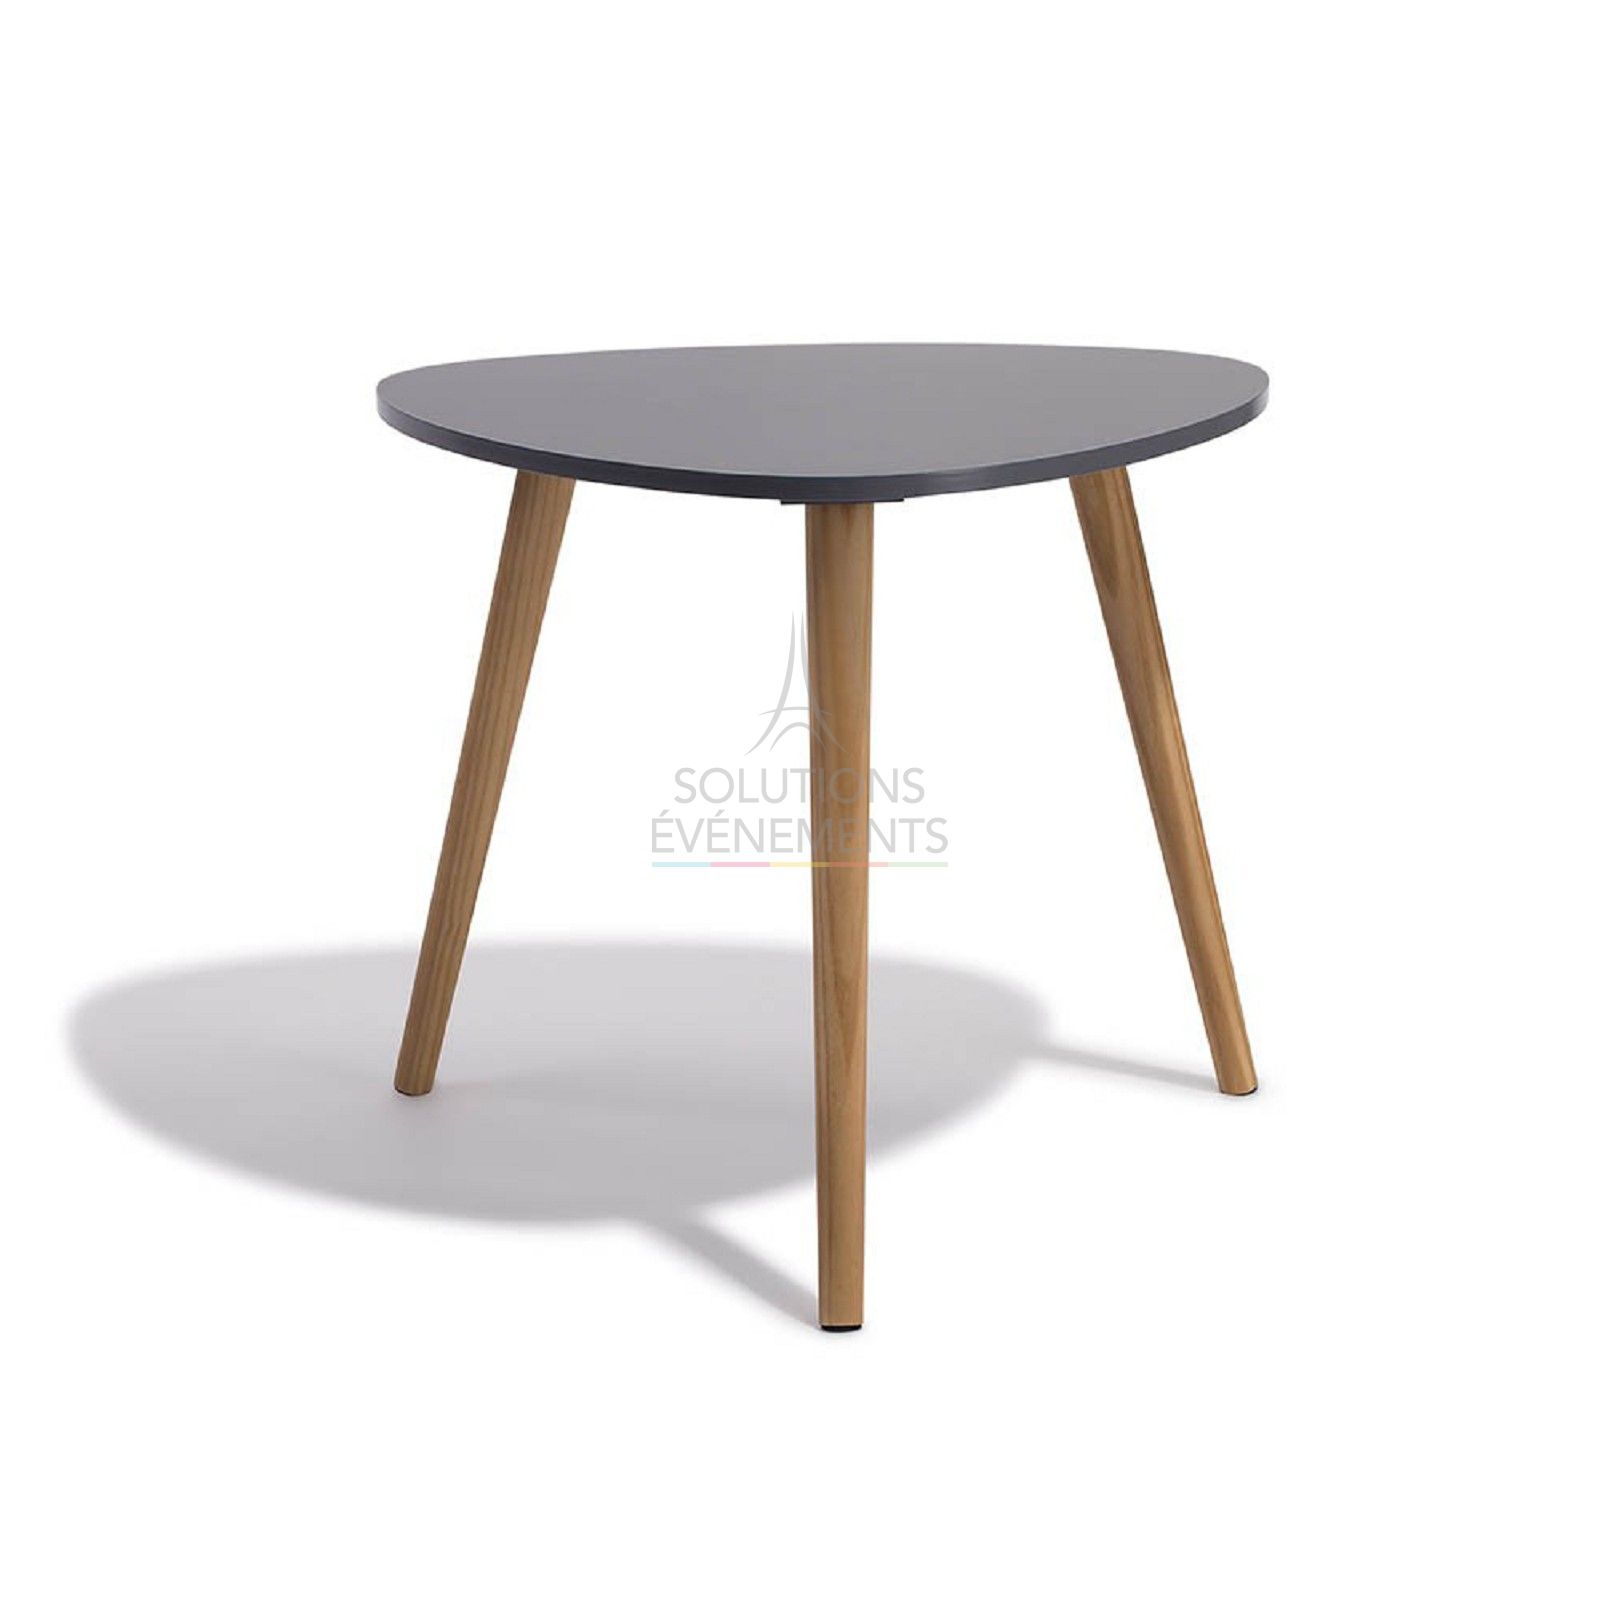 Scandinavian style 3-legged coffee table rental